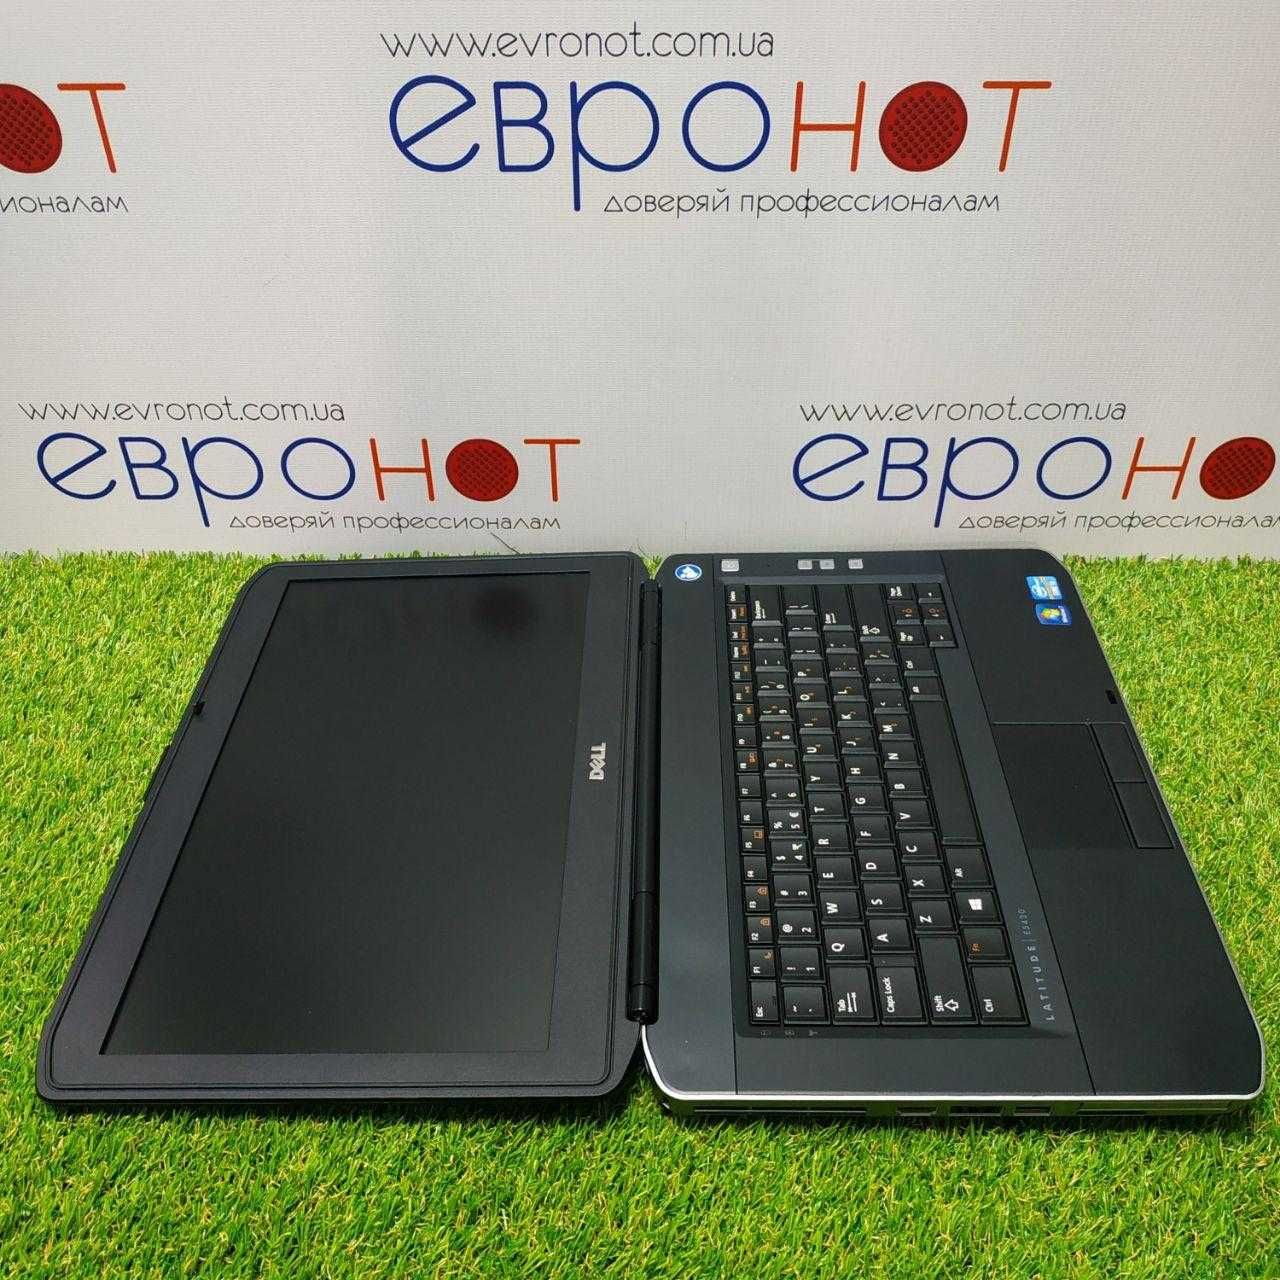 ТОП | Захищенний ноутбук із ЄС | SSD | Core i5-i7  / Кредит / Гарантія